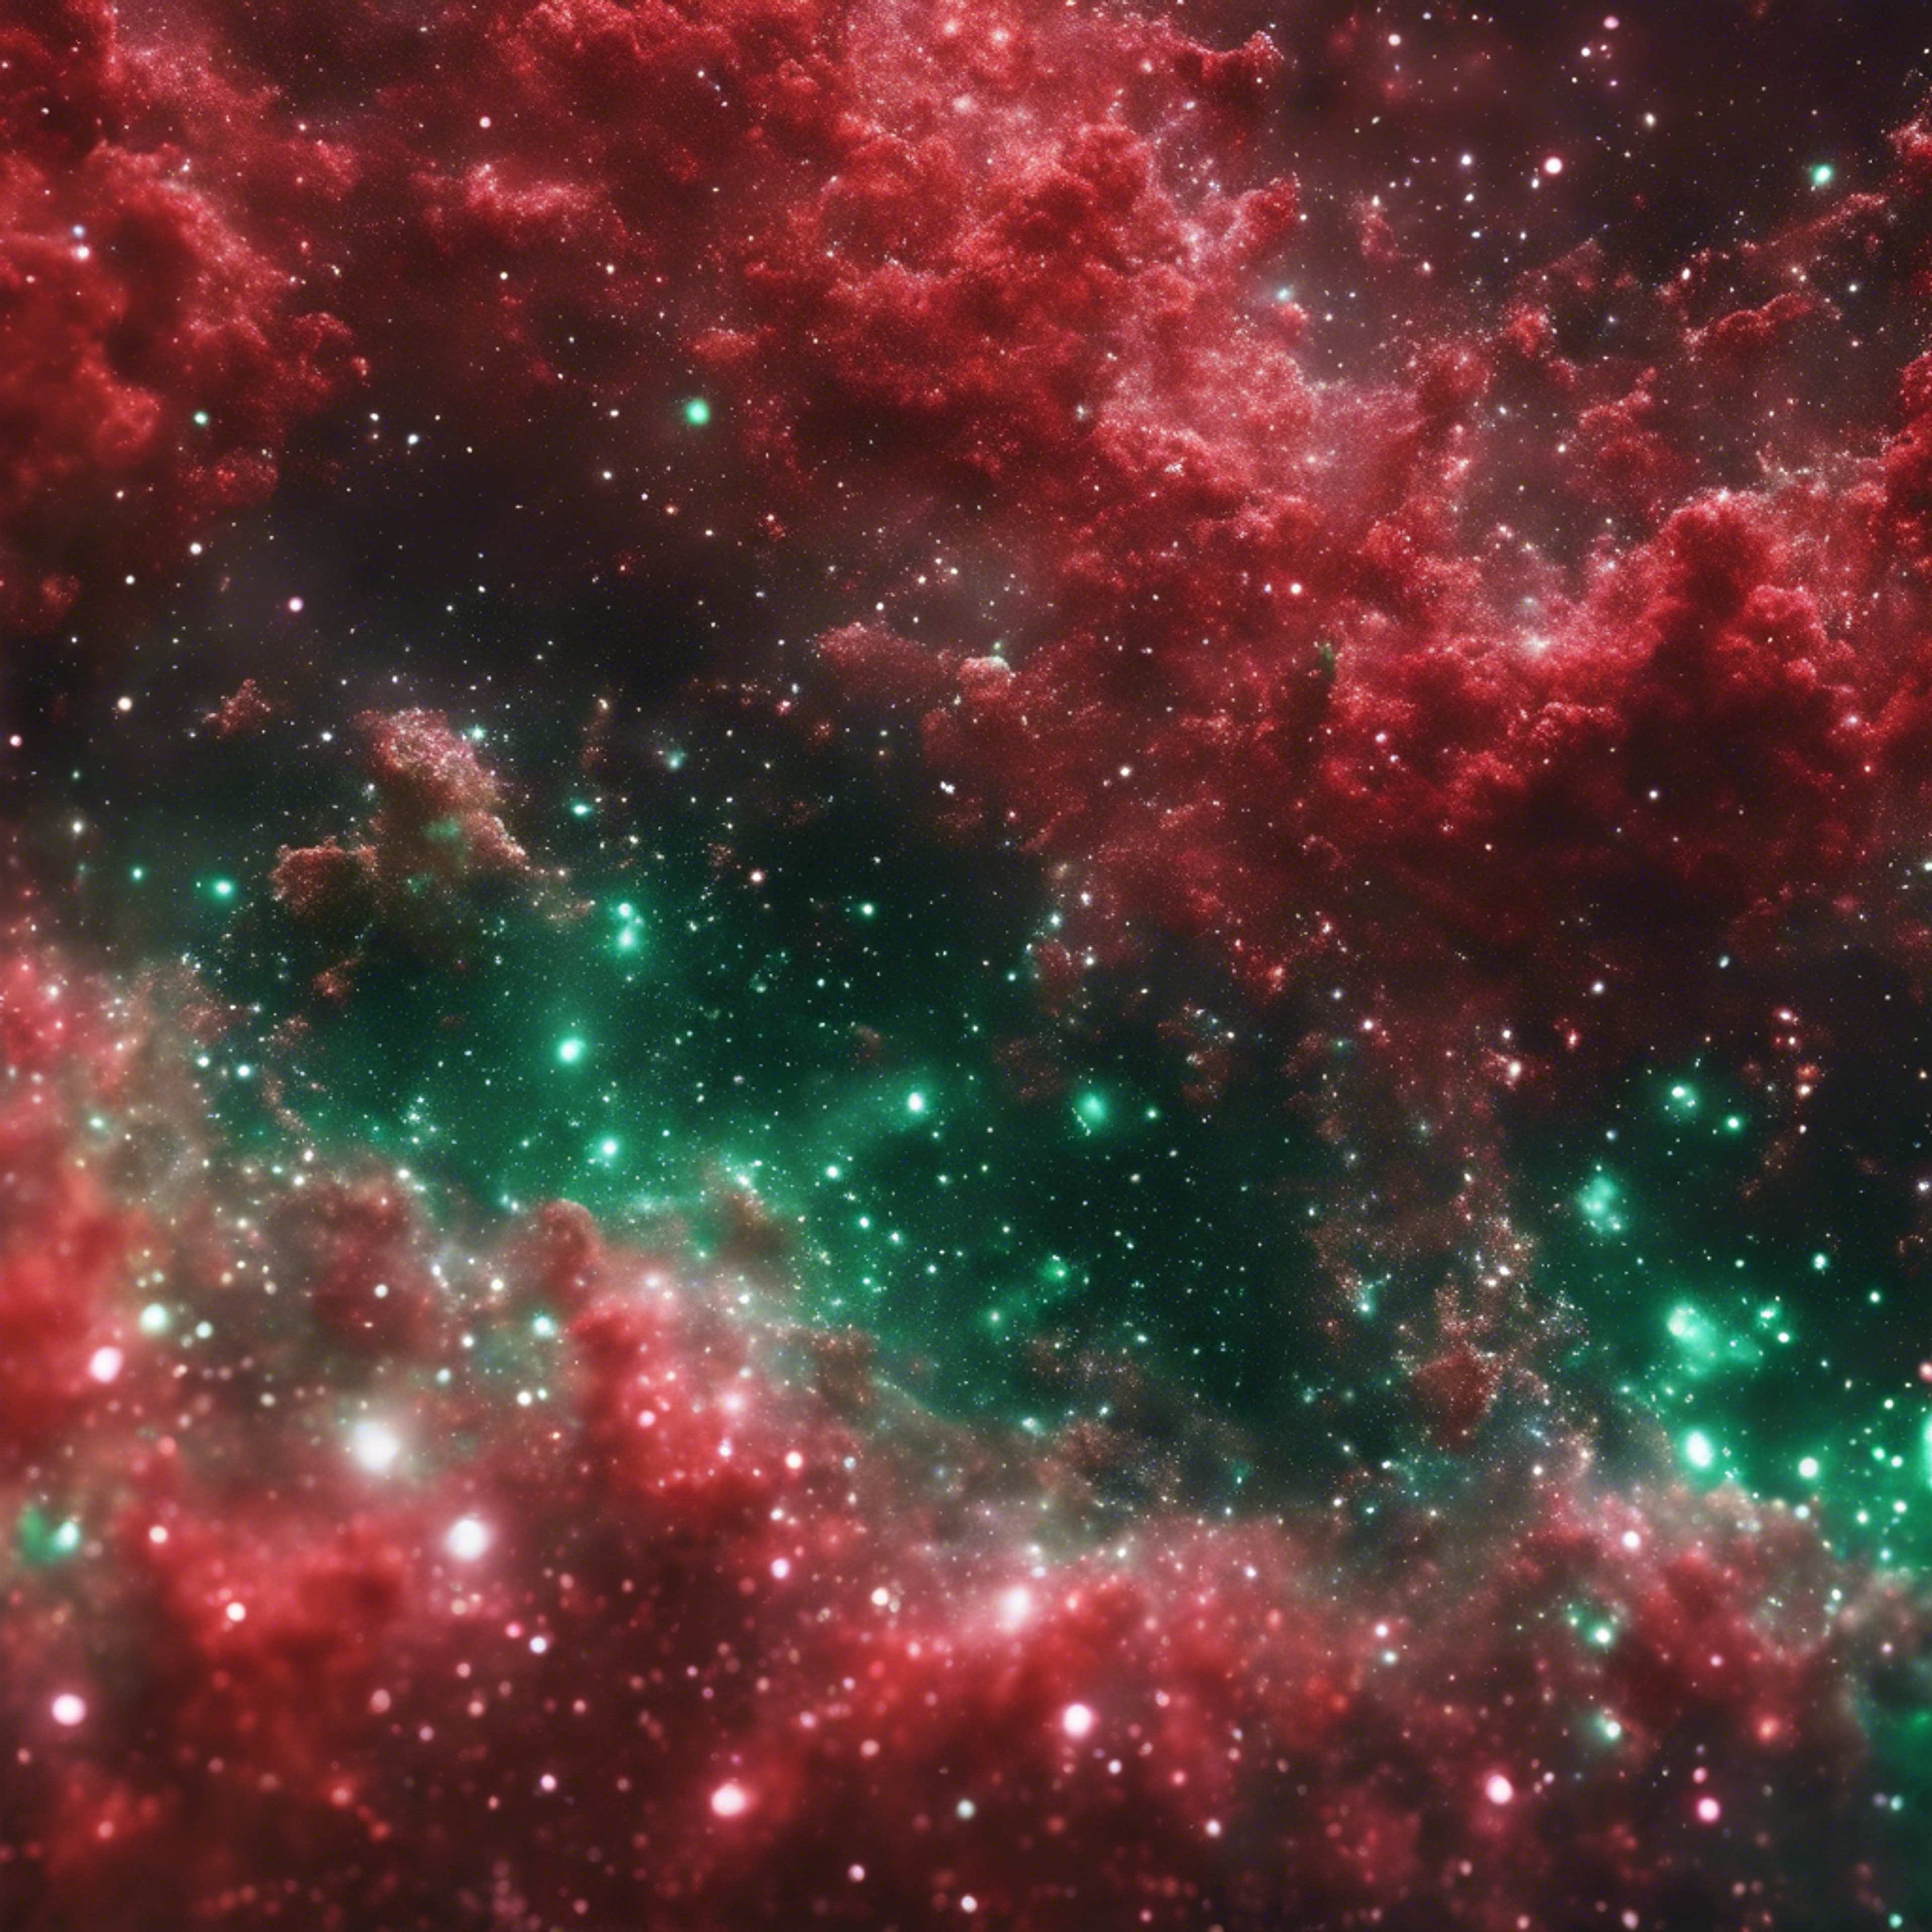 Red and green glitter spread like a nebula in space Divar kağızı[56bea9c0023d4b1f9afc]